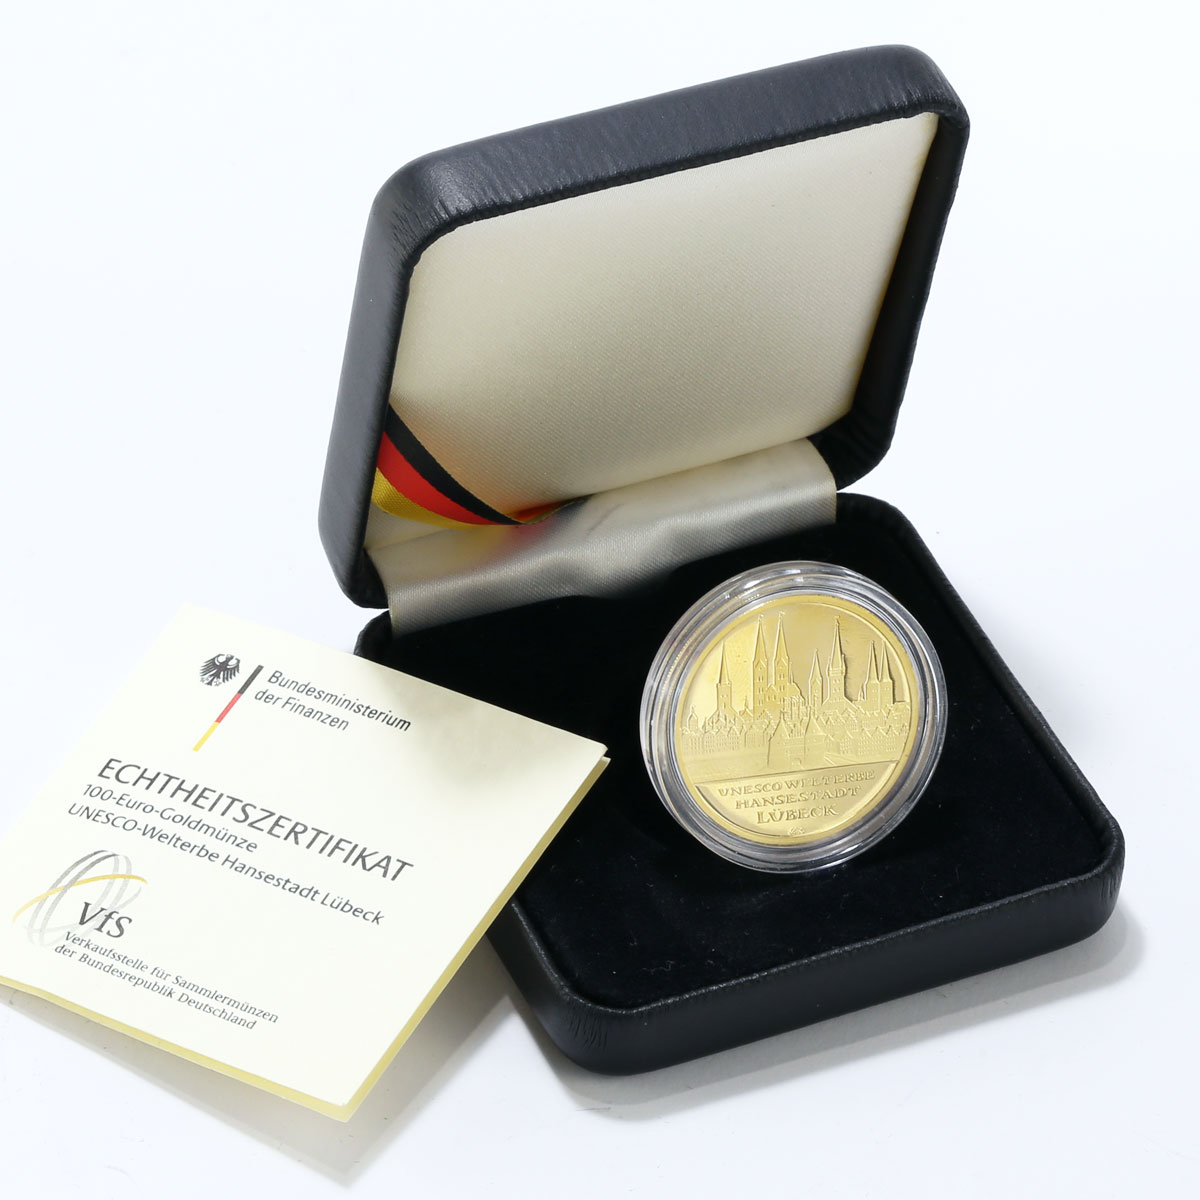 Germany 100 euro Hansestadt Lubeck UNESCO World Heritage City gold coin 2007